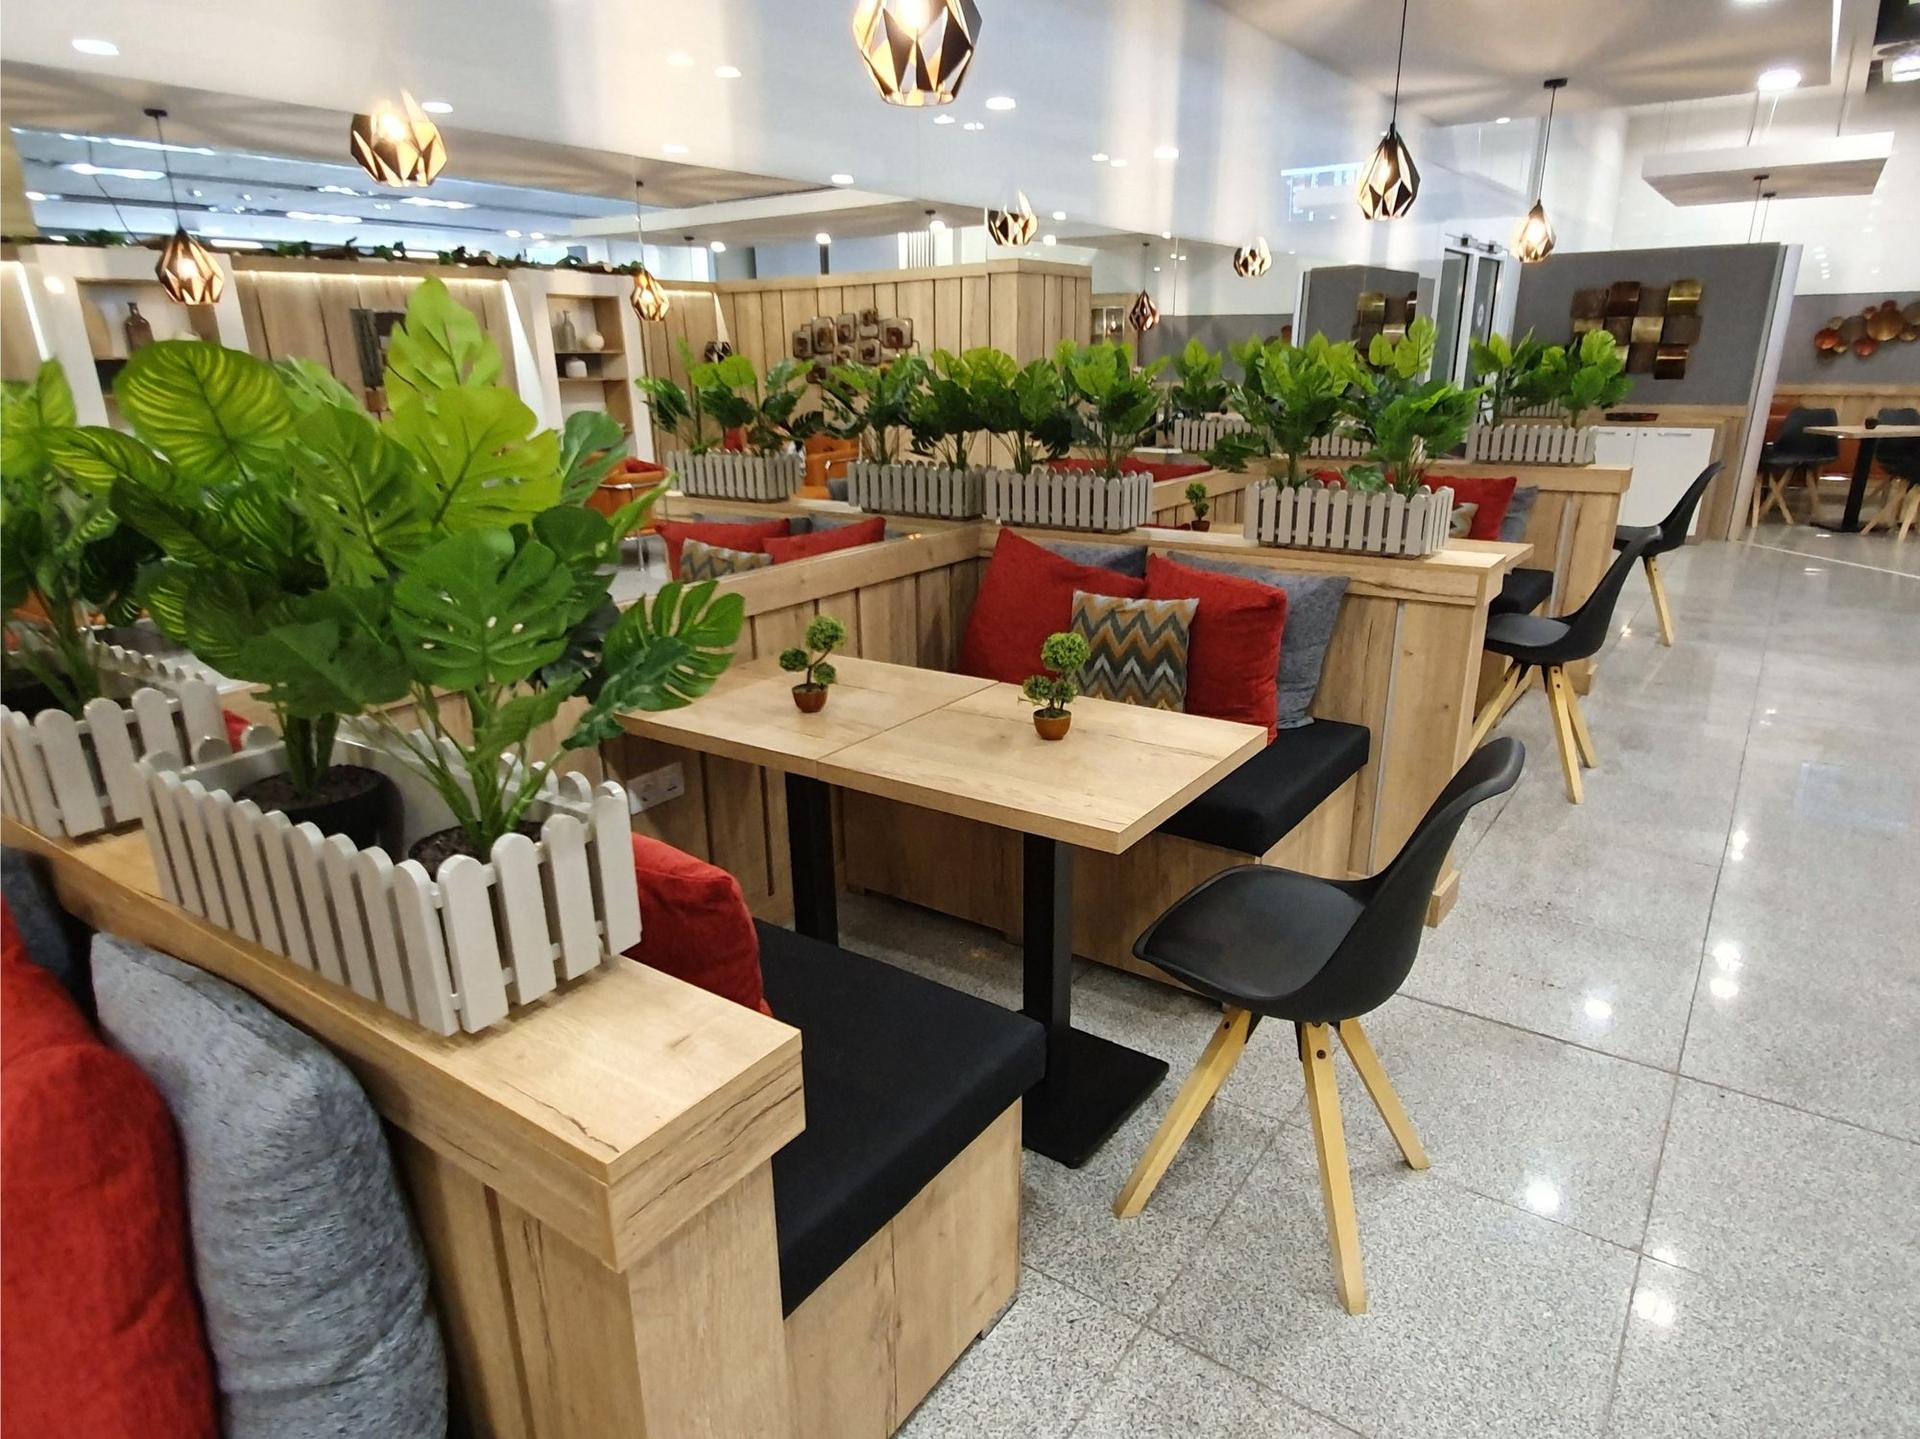 Burgas Airport Lounge image 4 of 43